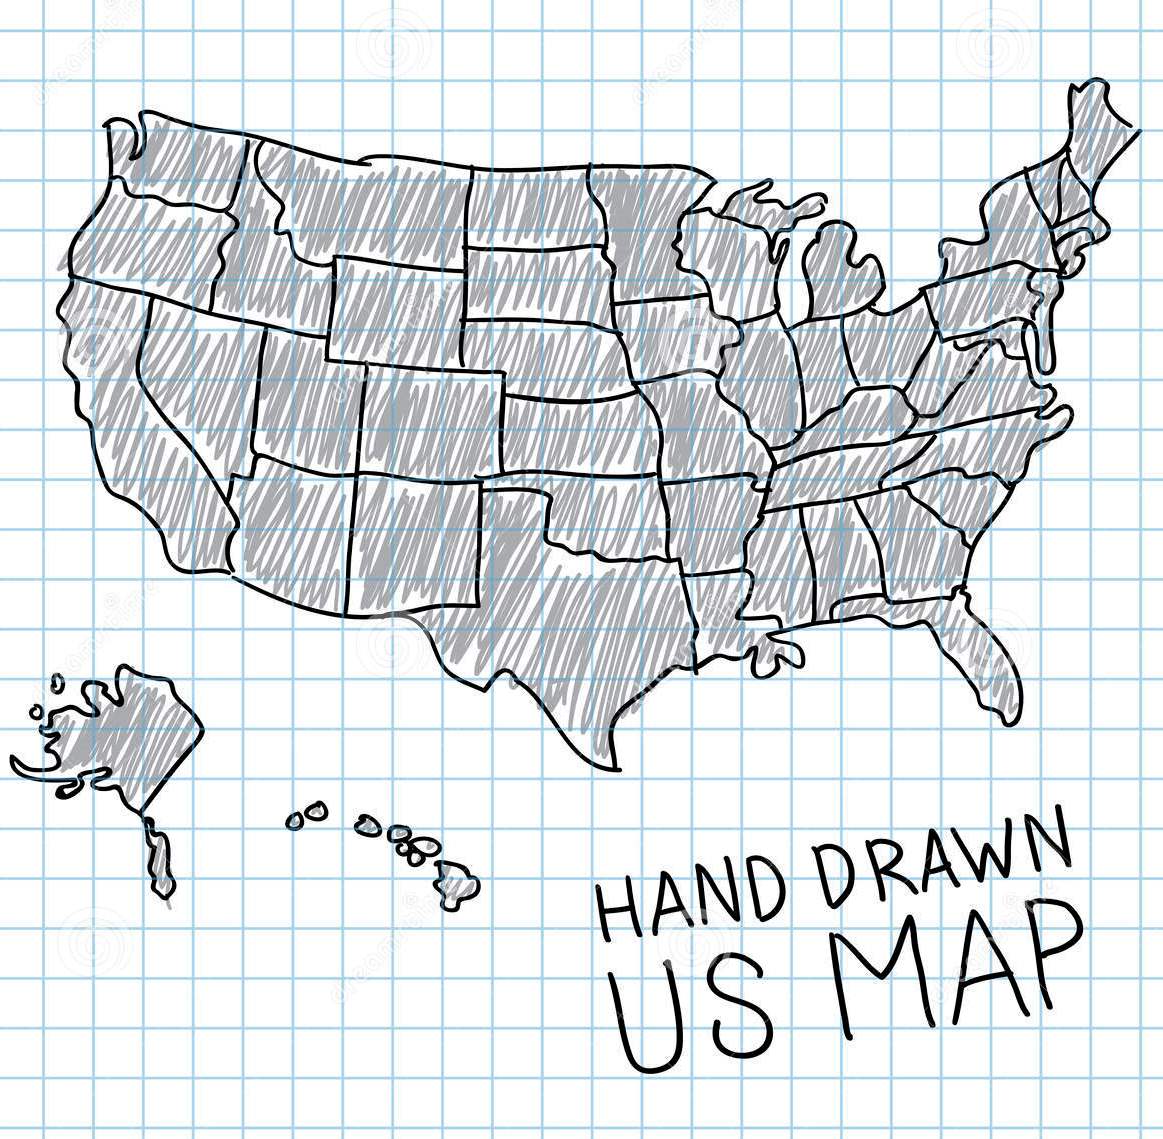 Hand drawn map